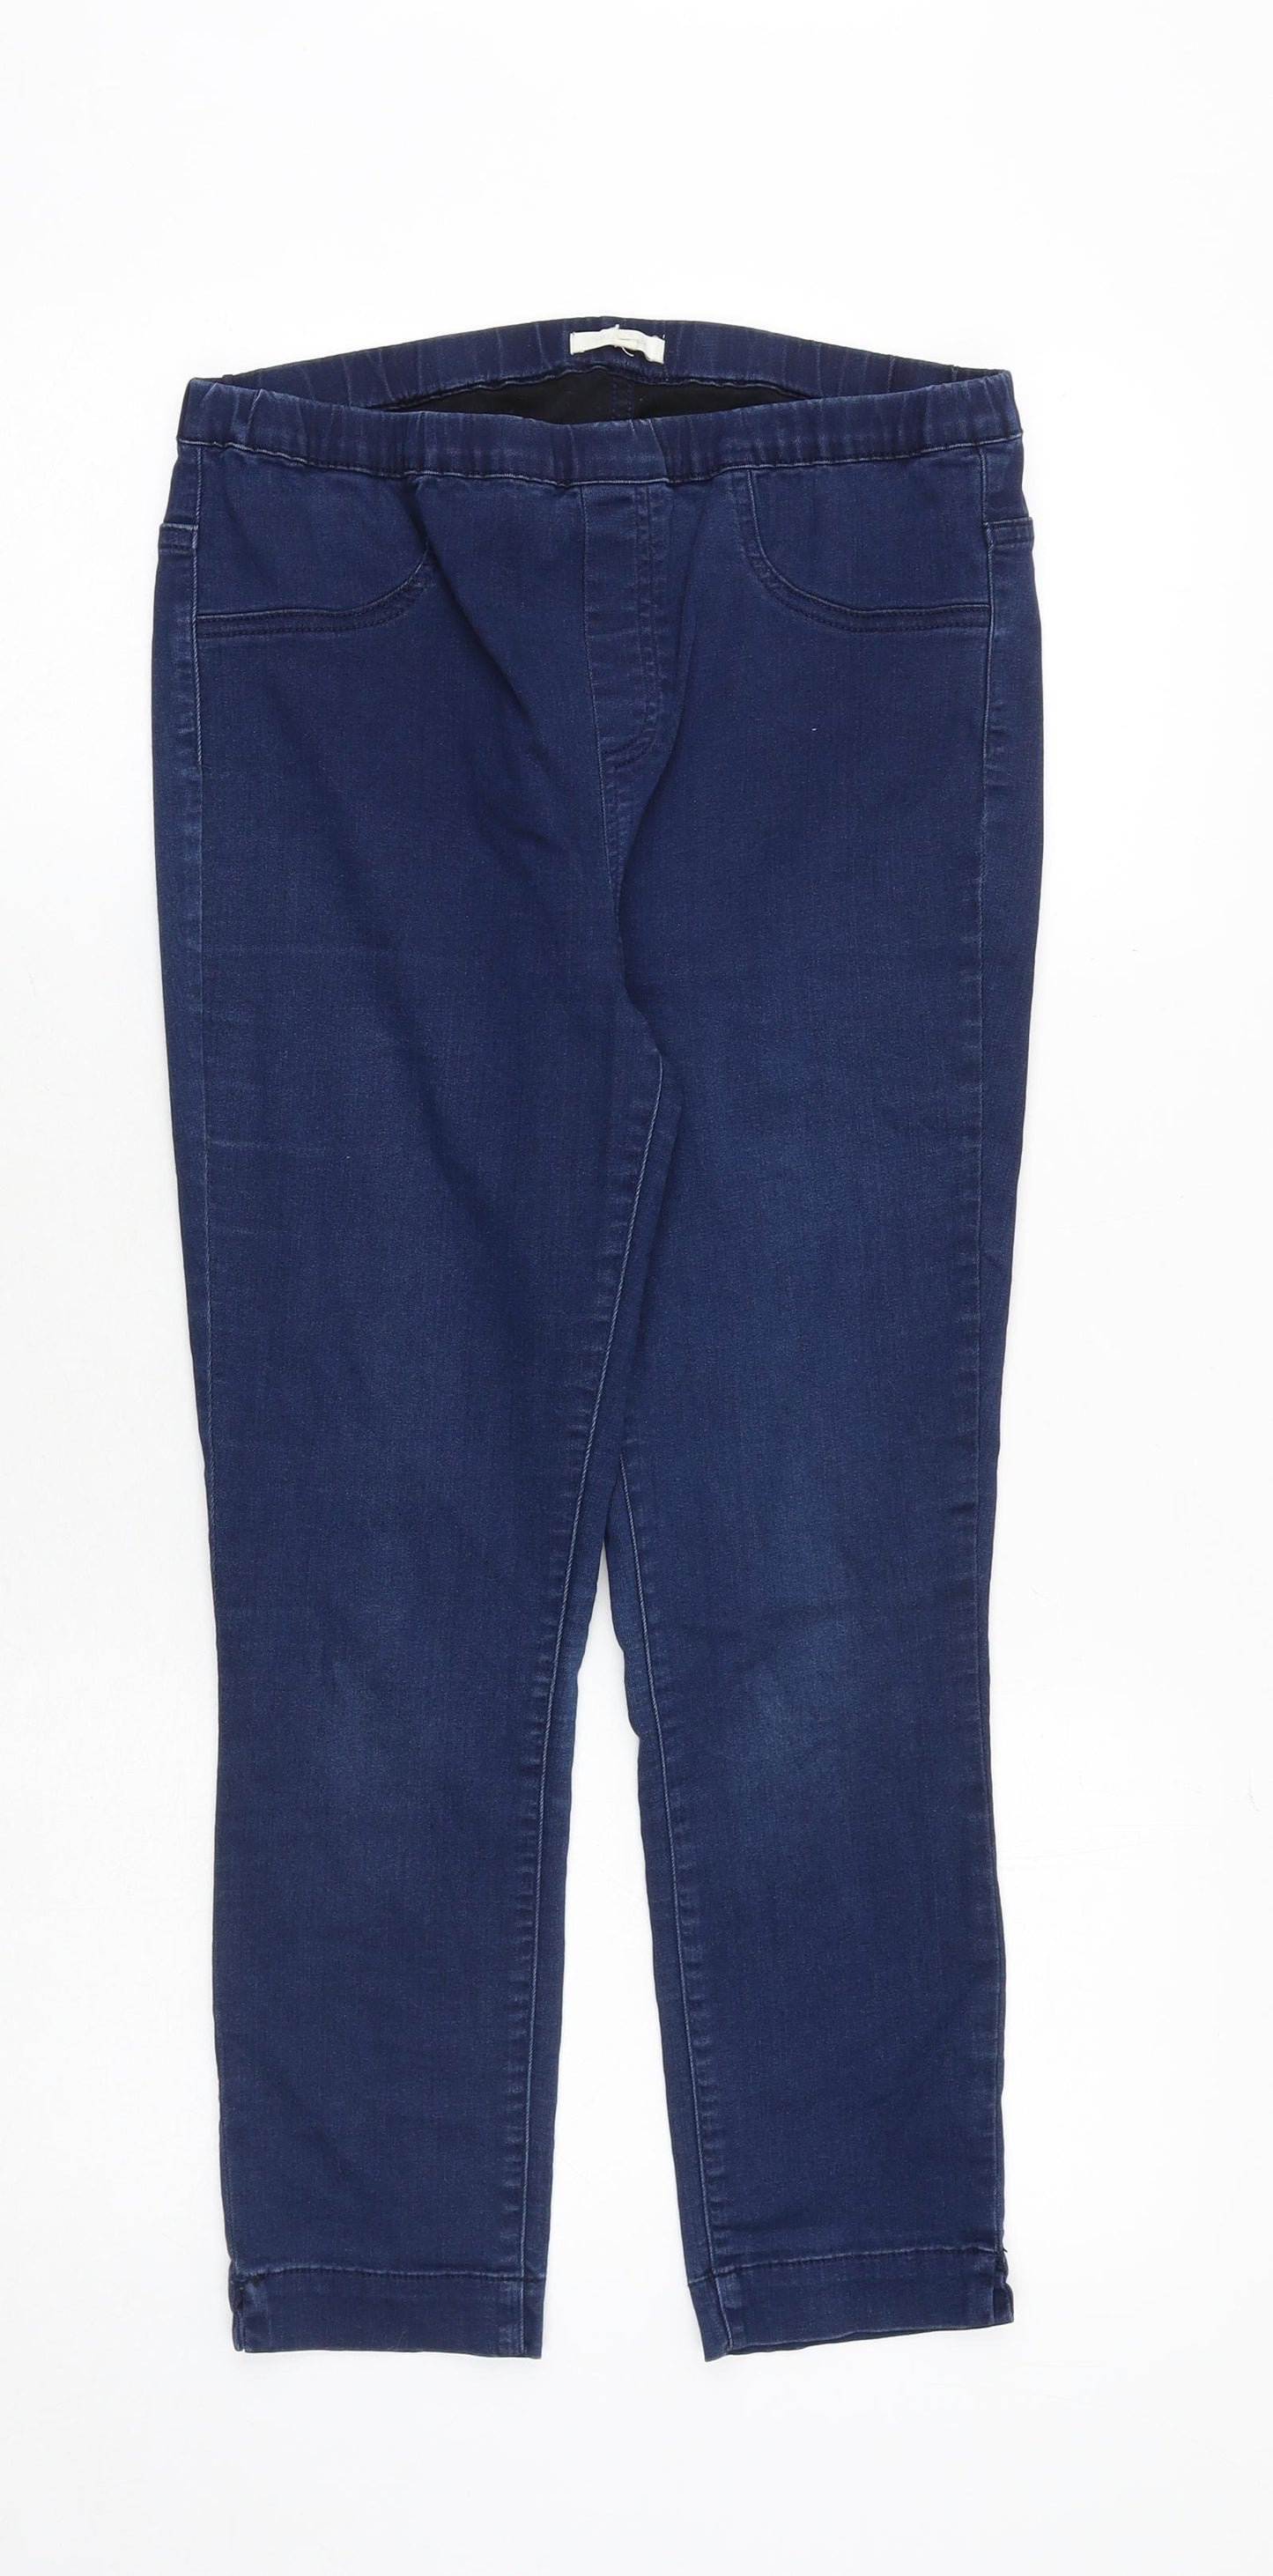 White Stuff Womens Blue Cotton Jegging Jeans Size 14 Regular